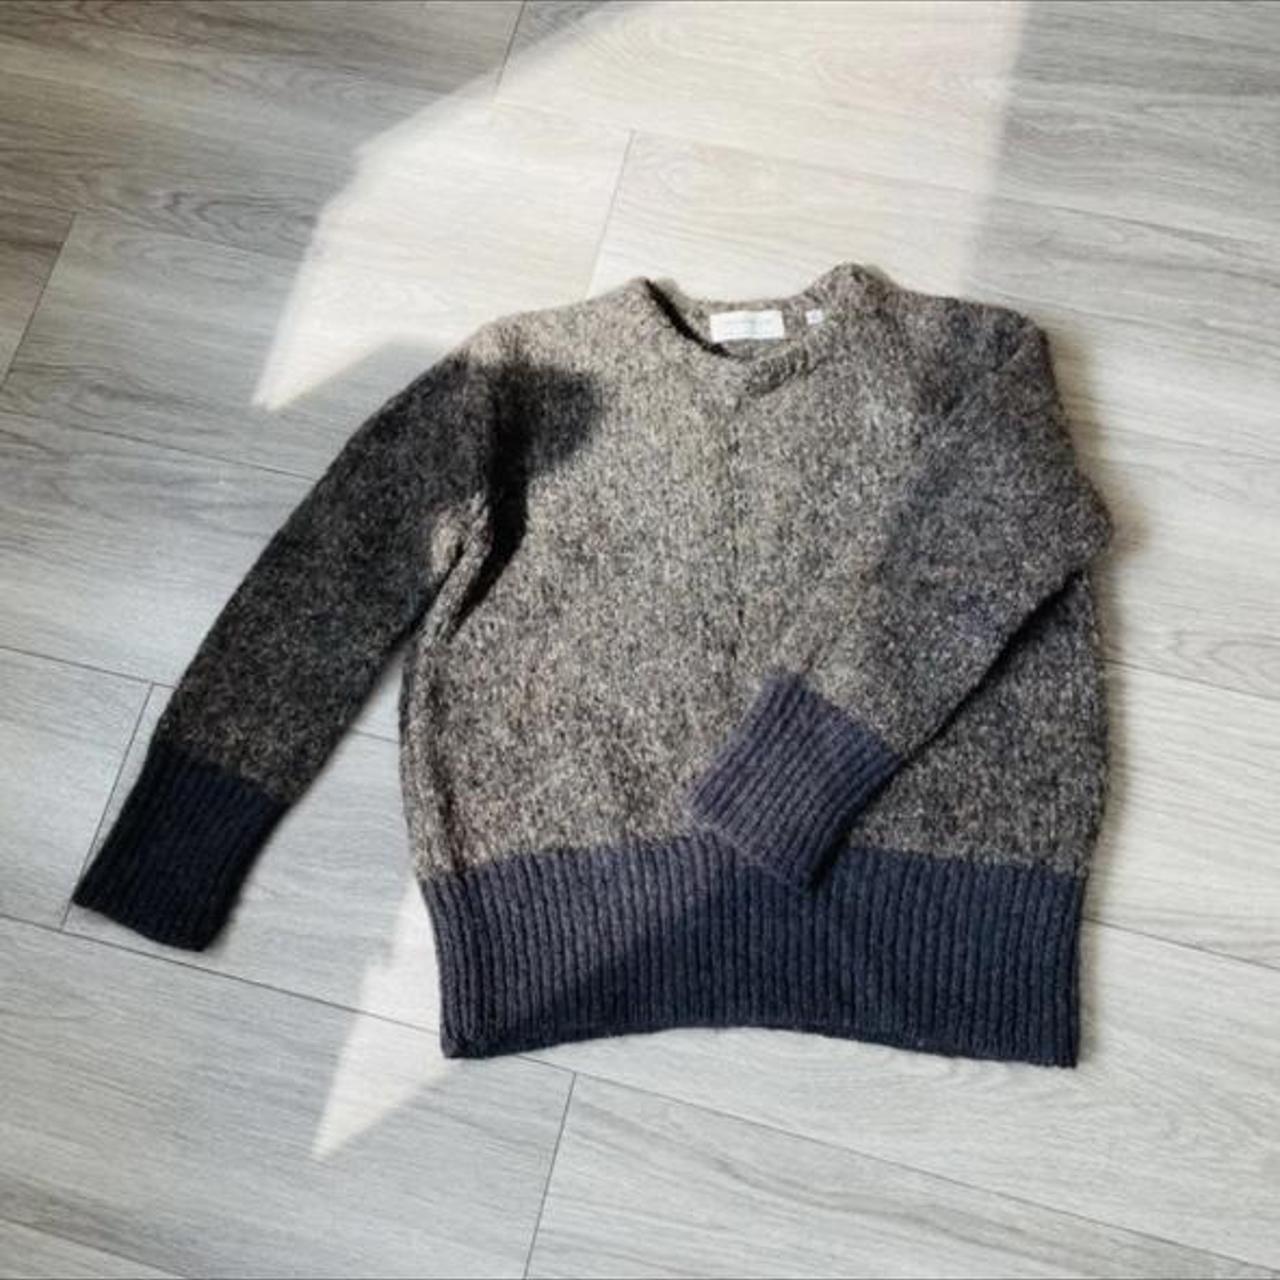 Product Image 2 - Tomorrowland Mélange Alpaca-blend Sweater

Size: S

Designed